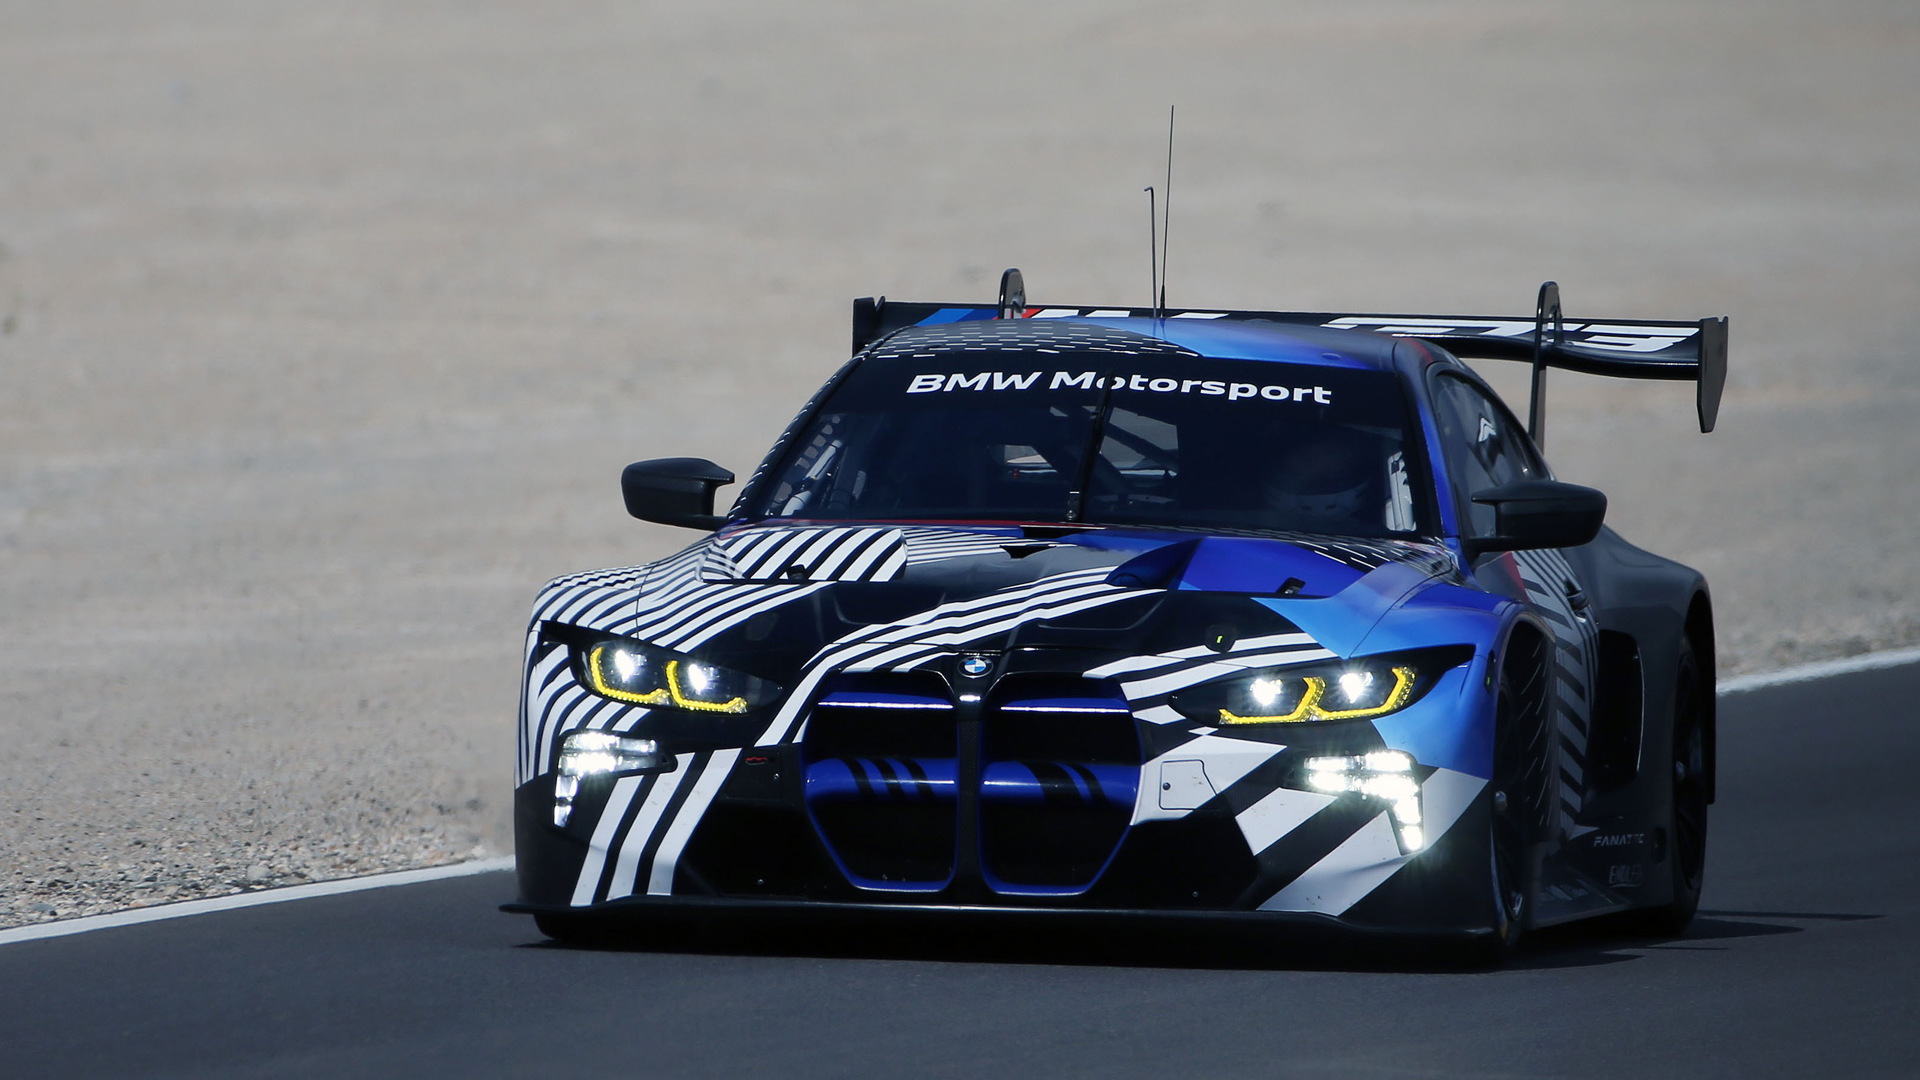 2022 BMW M4 GT3 race car prototype